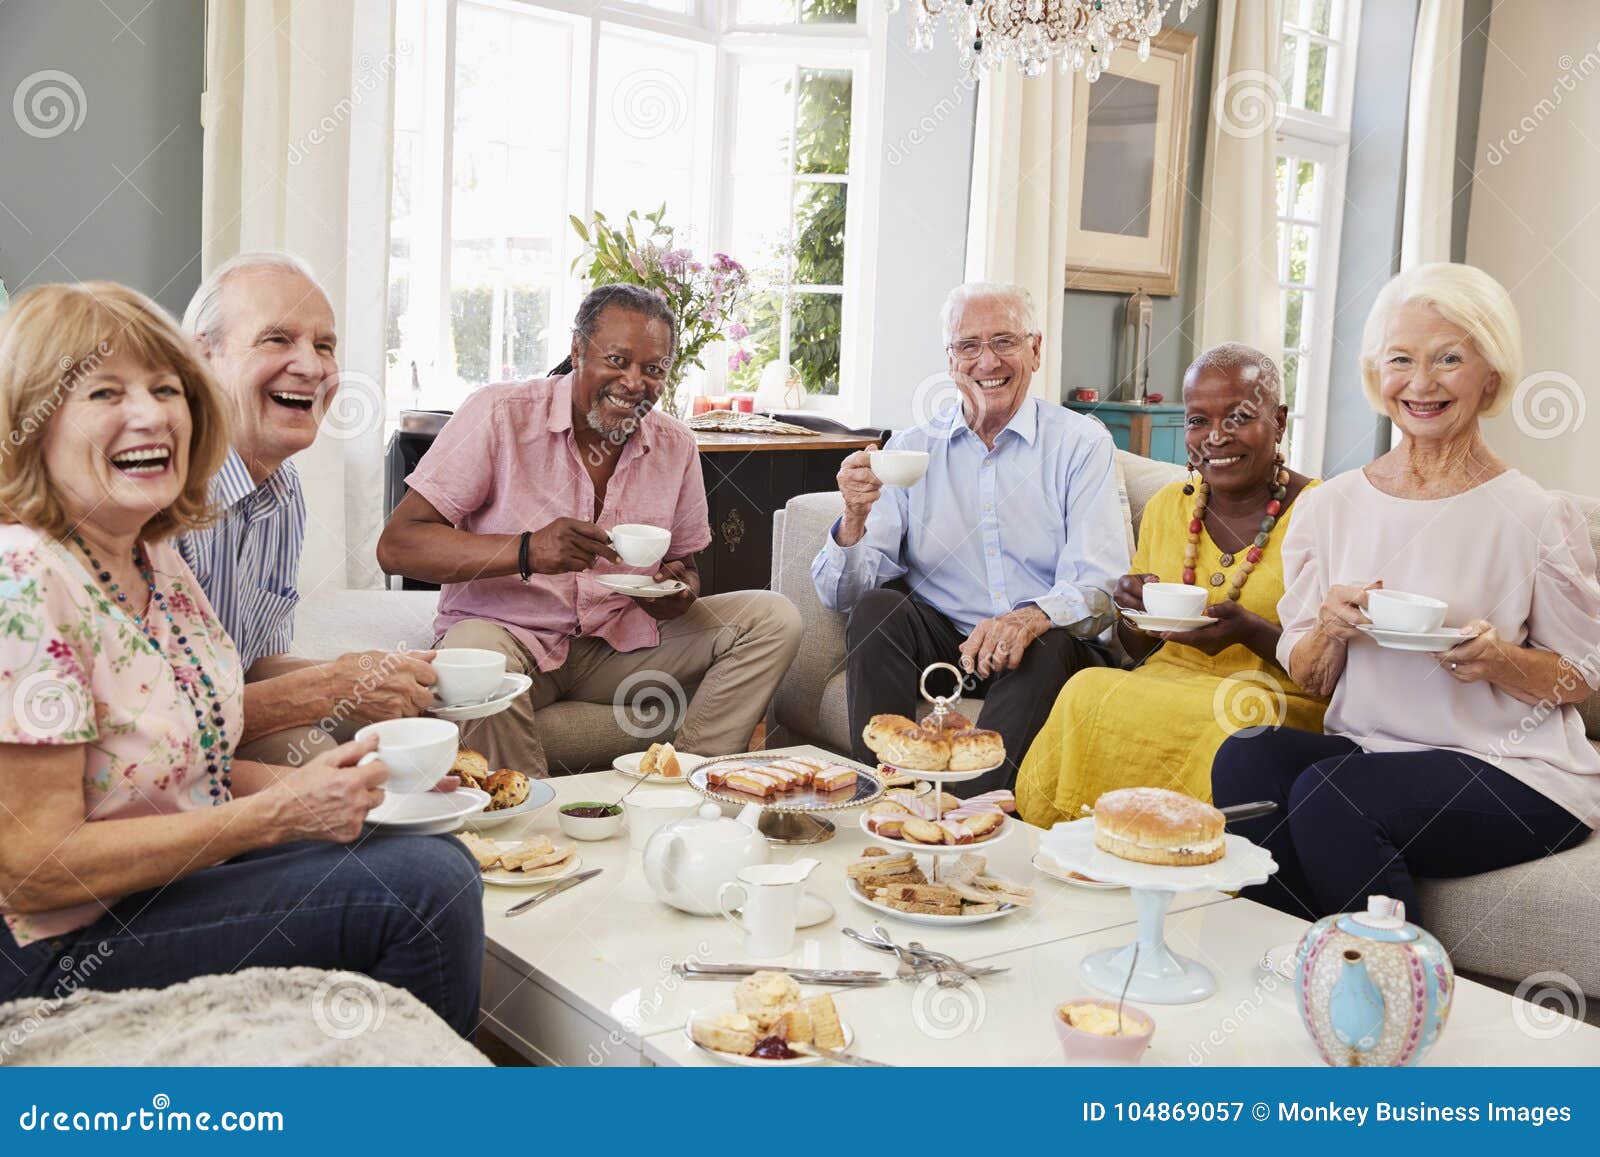 portrait of senior friends enjoying afternoon tea at home